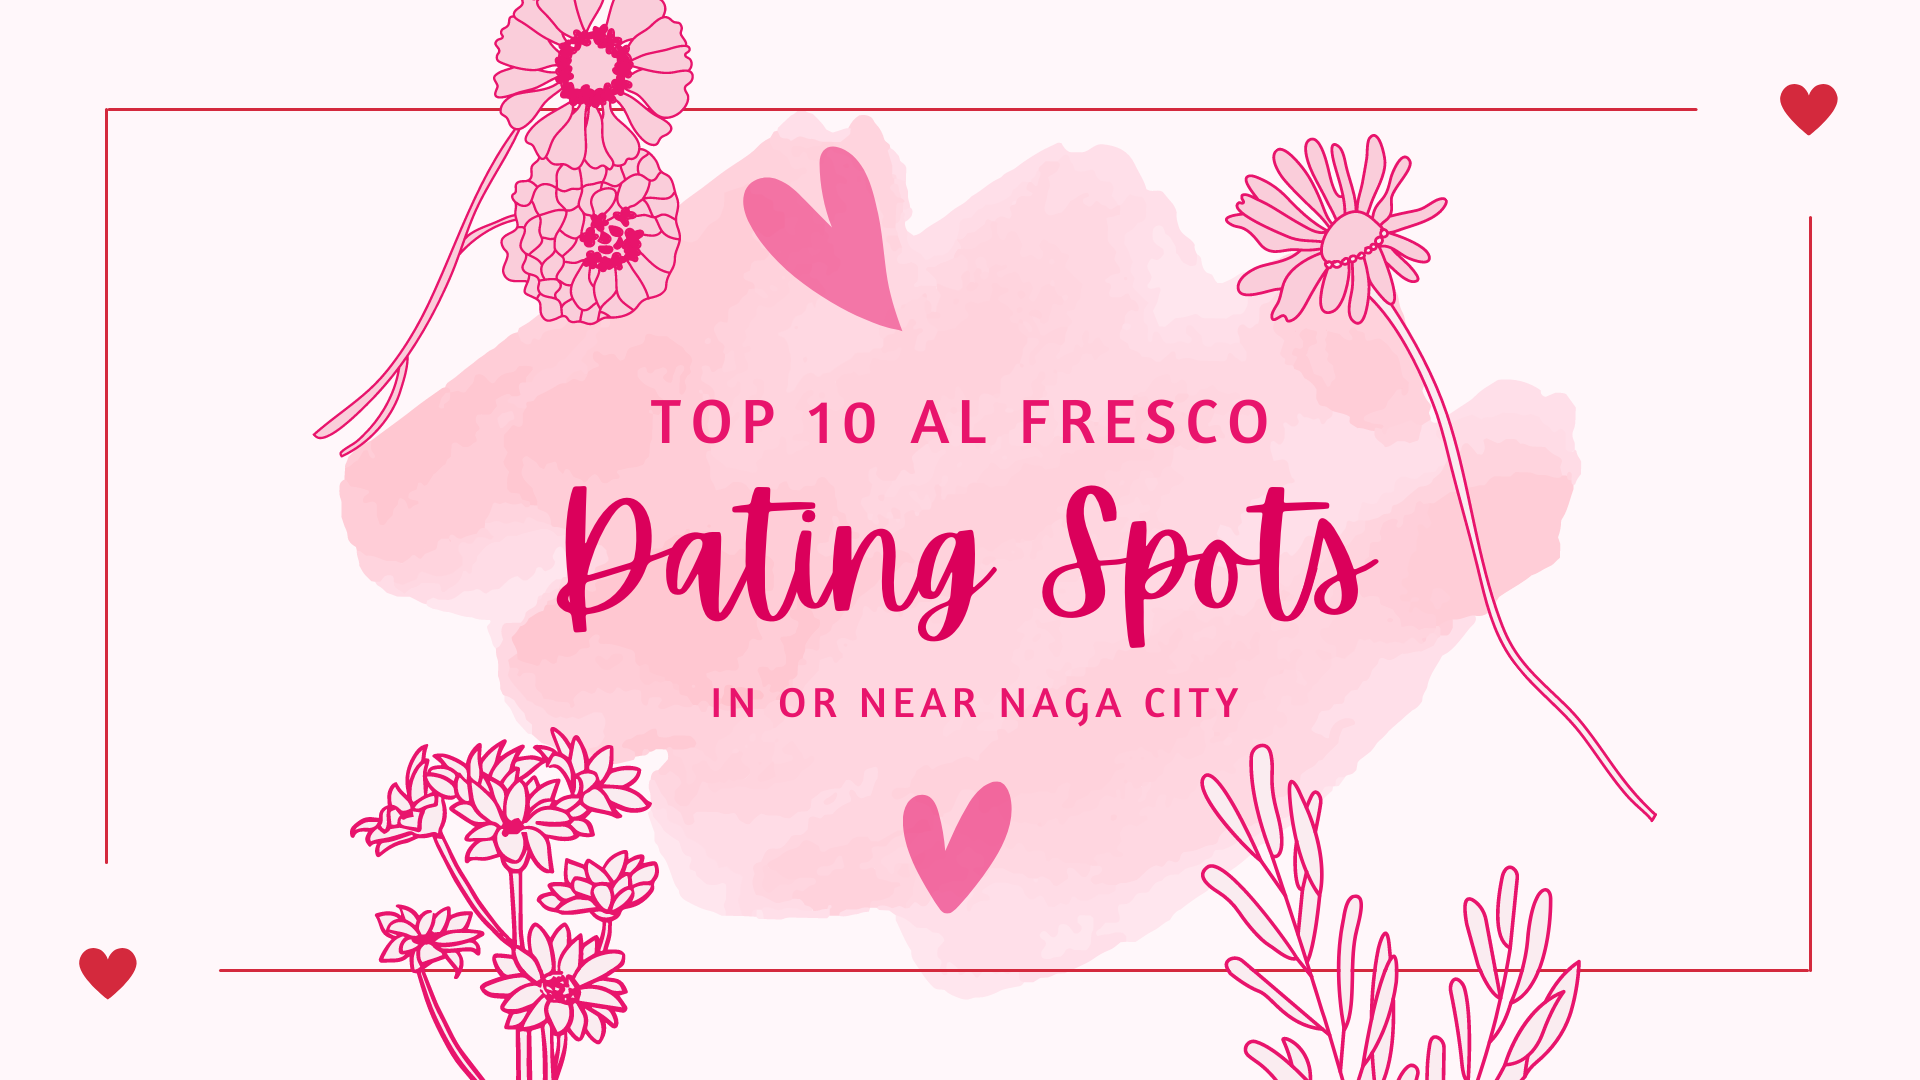 10 Al Fresco Dating Spots In or Near Naga City This Valentine's Day